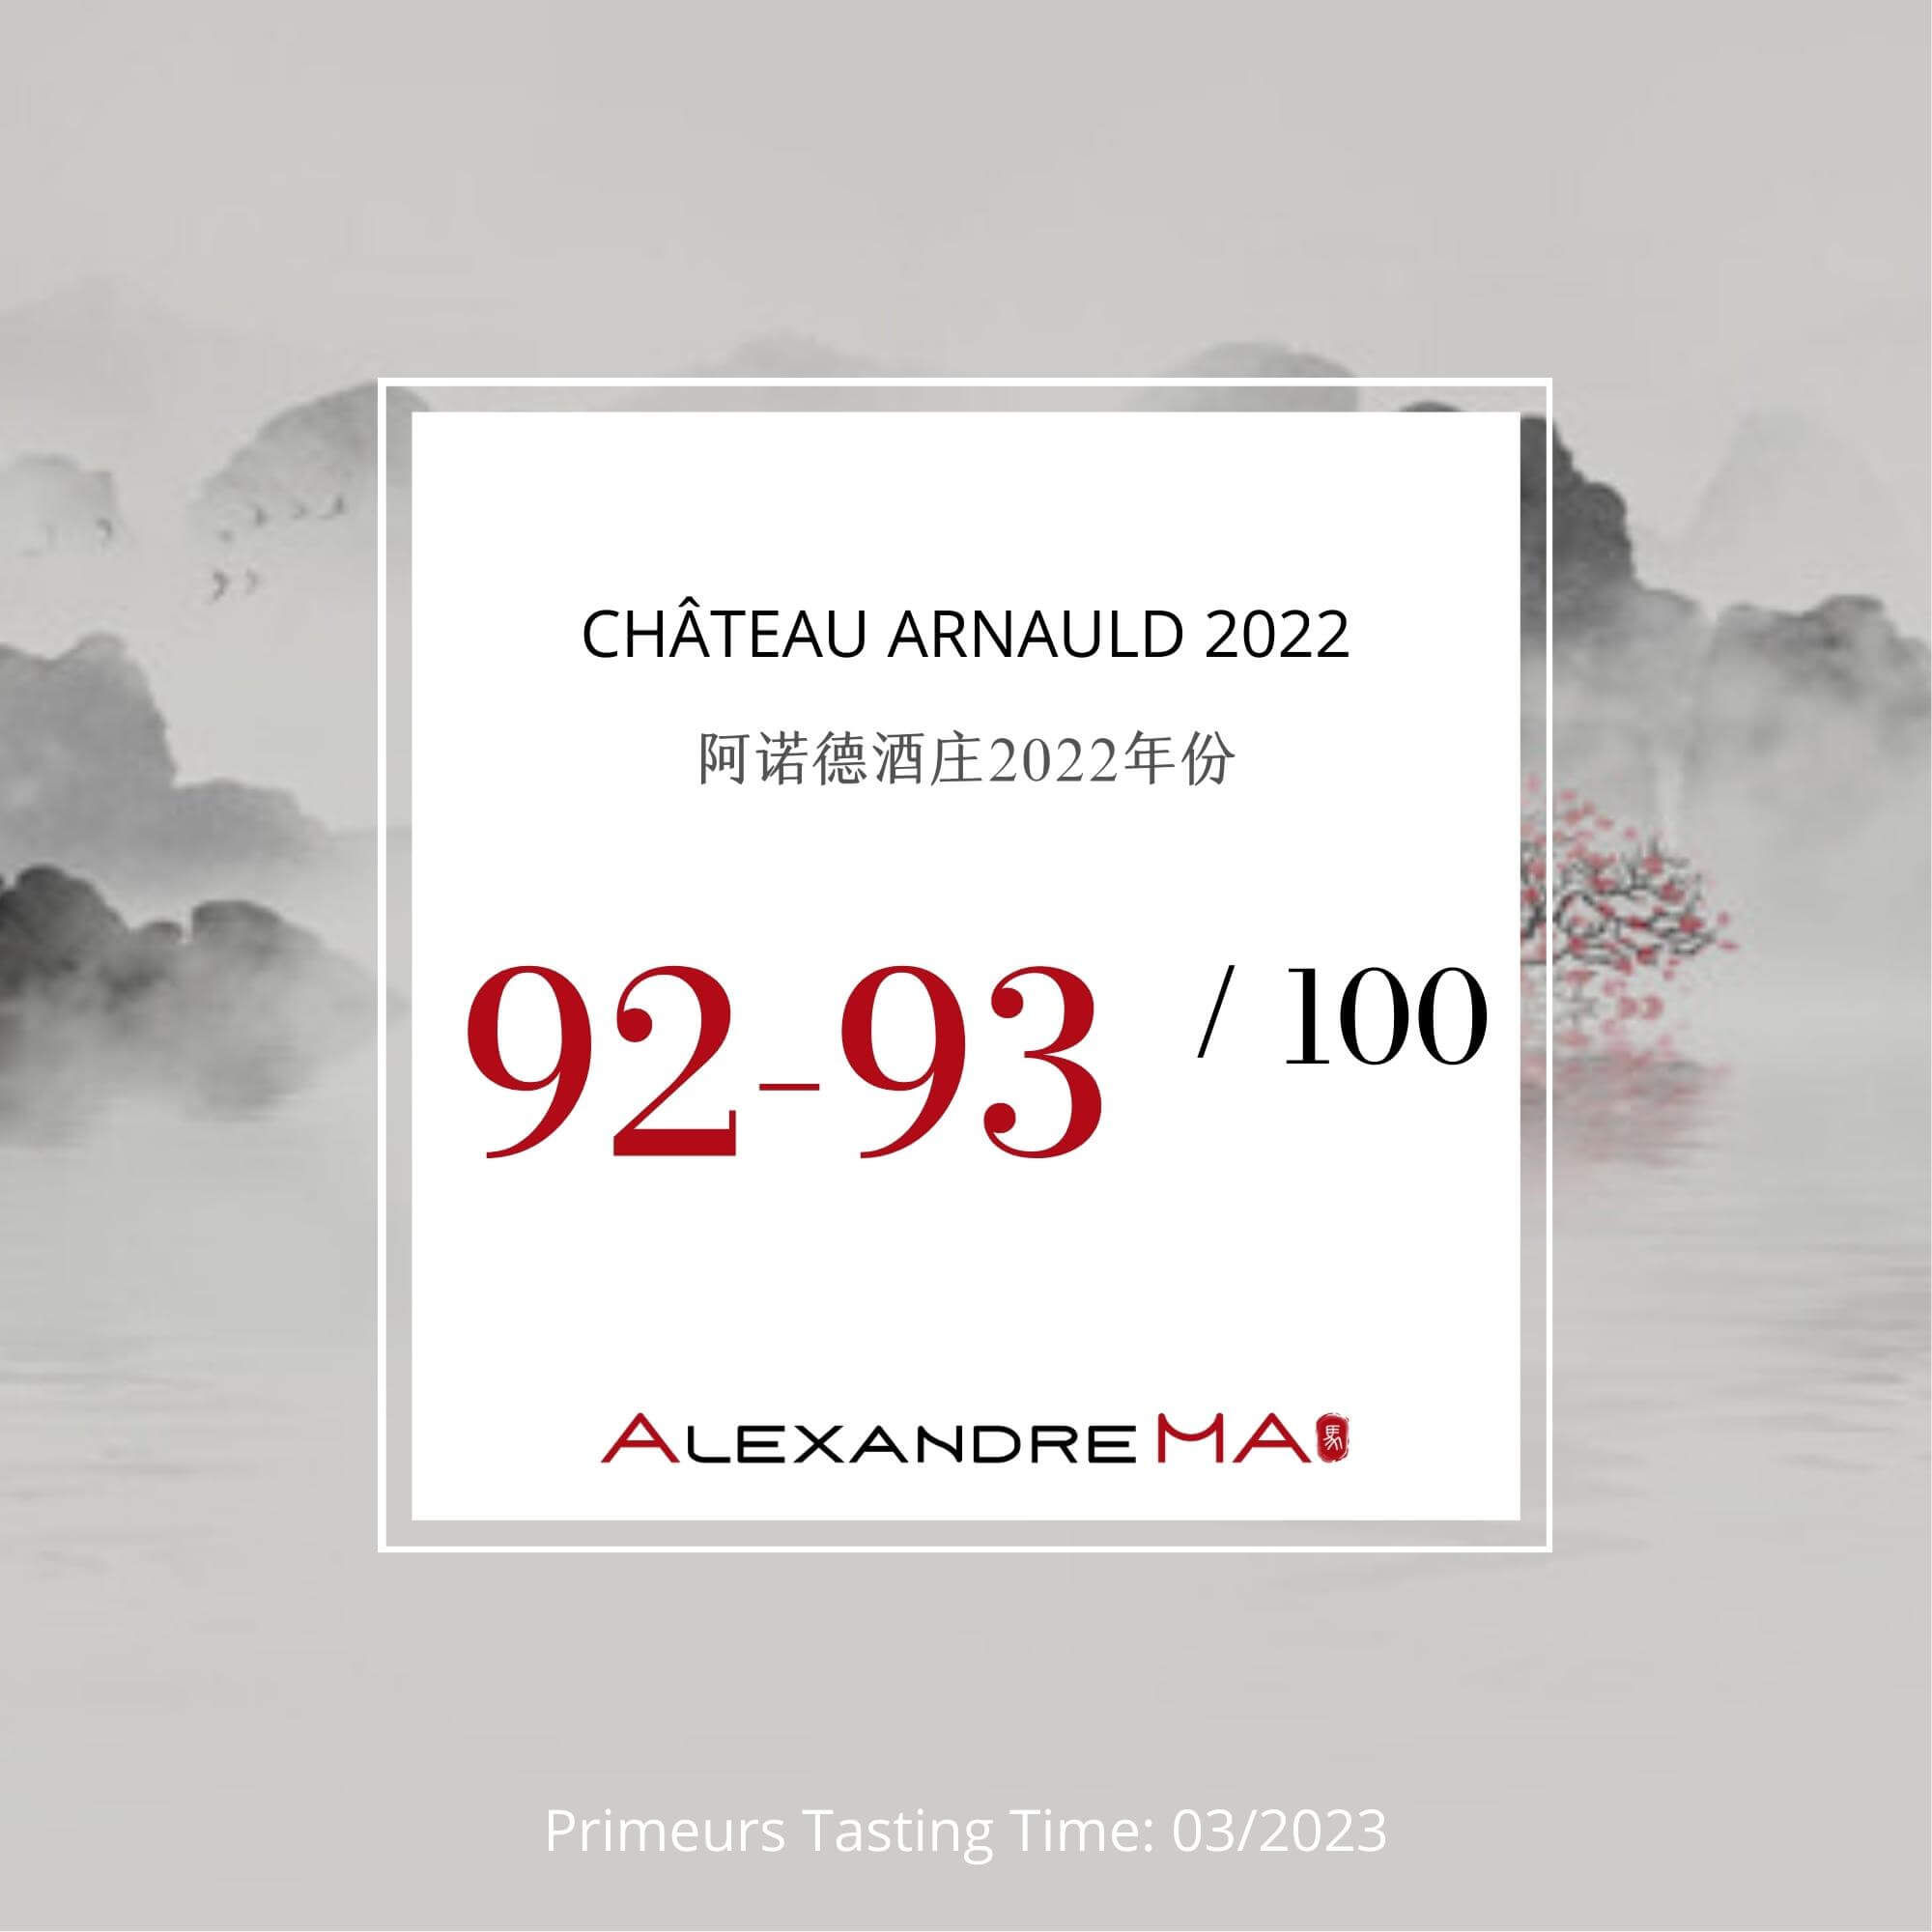 Château Arnauld 2022 Primeurs - Alexandre MA